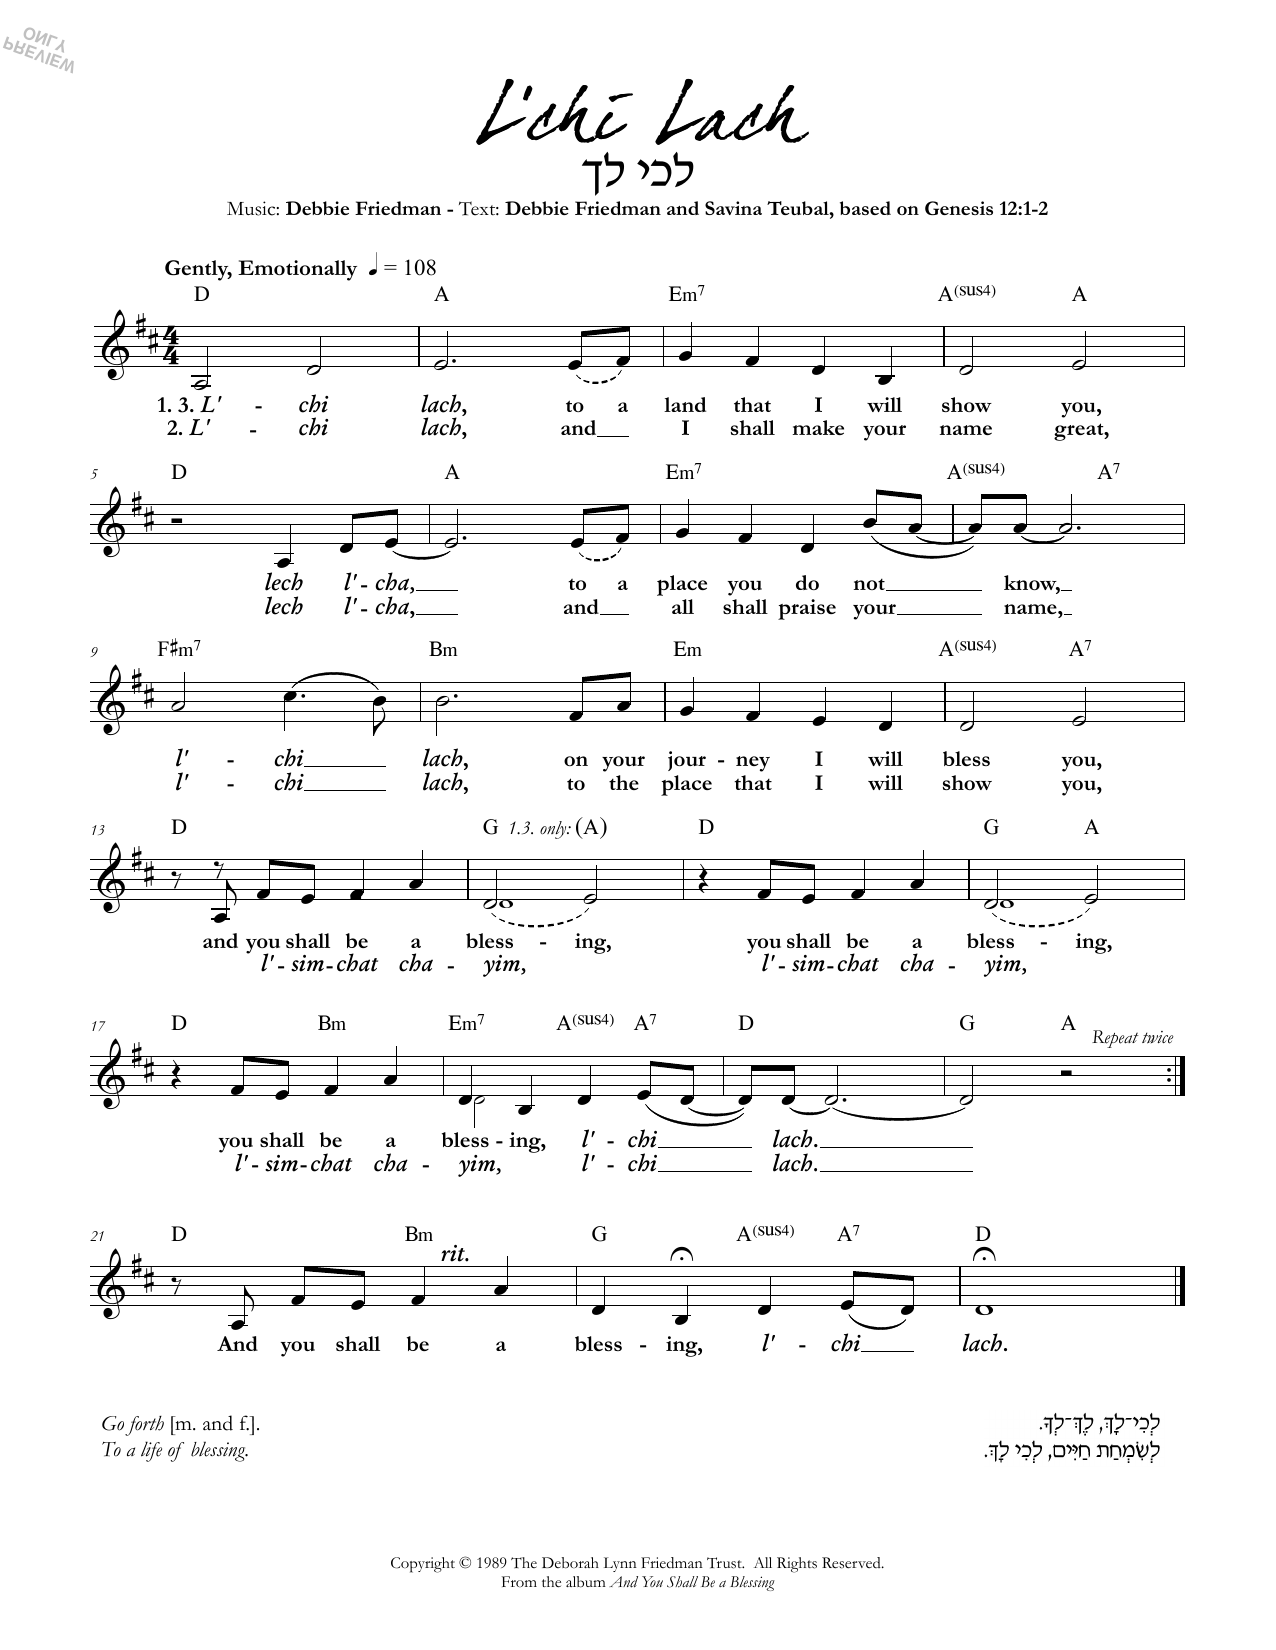 Debbie Friedman & Savina Teubal L'chi Lach Sheet Music Notes & Chords for Lead Sheet / Fake Book - Download or Print PDF